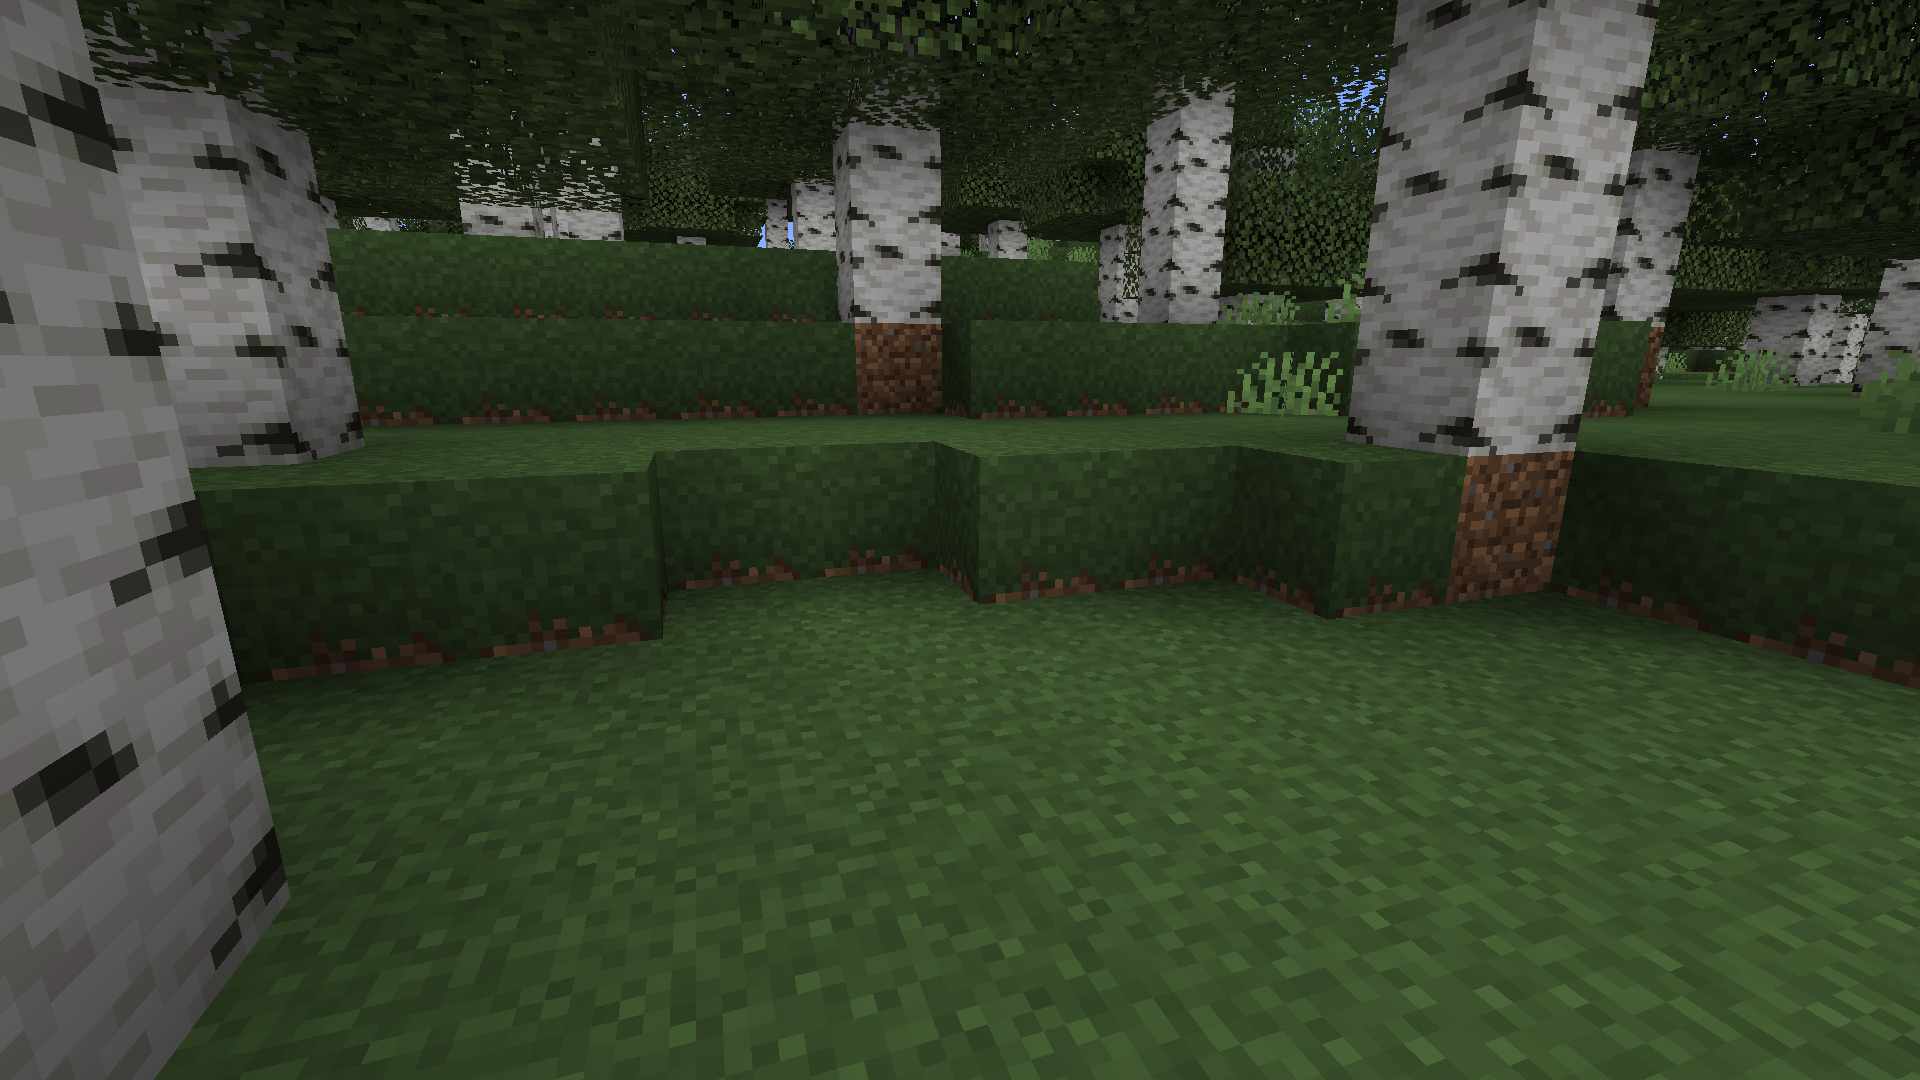 Just a birch forest